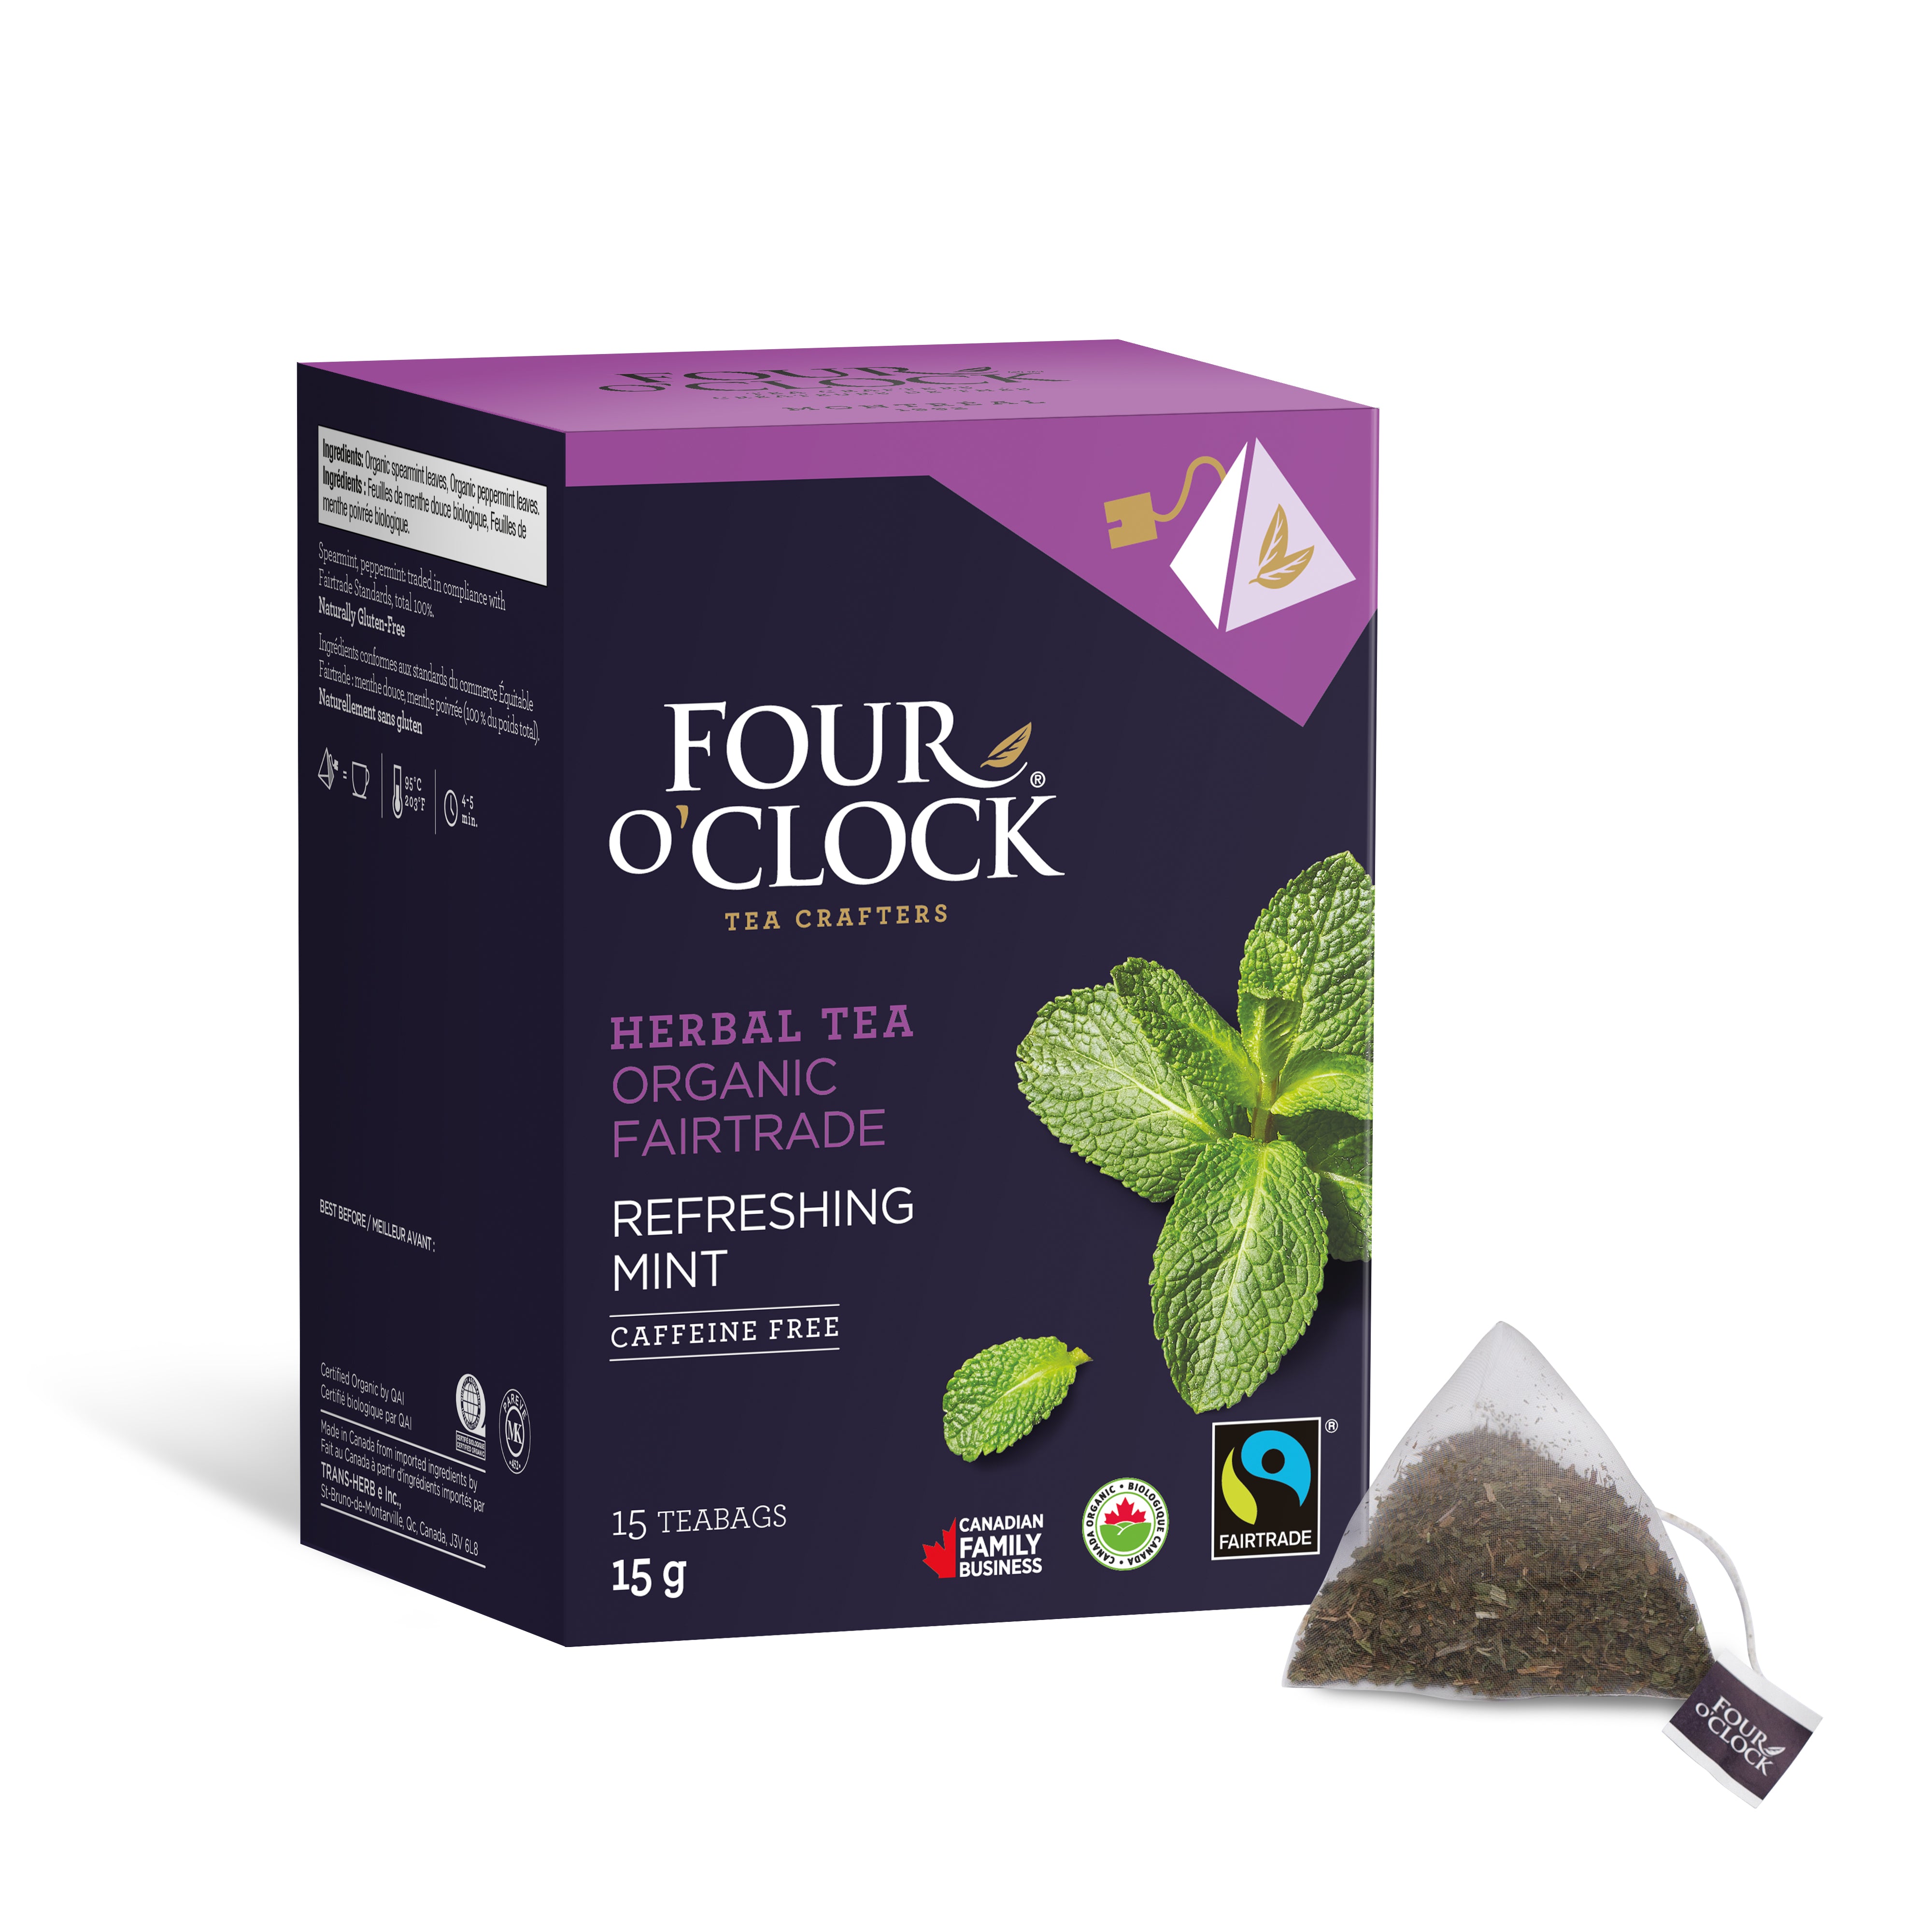 Refreshing Mint Organic Fairtrade Herbal Tea